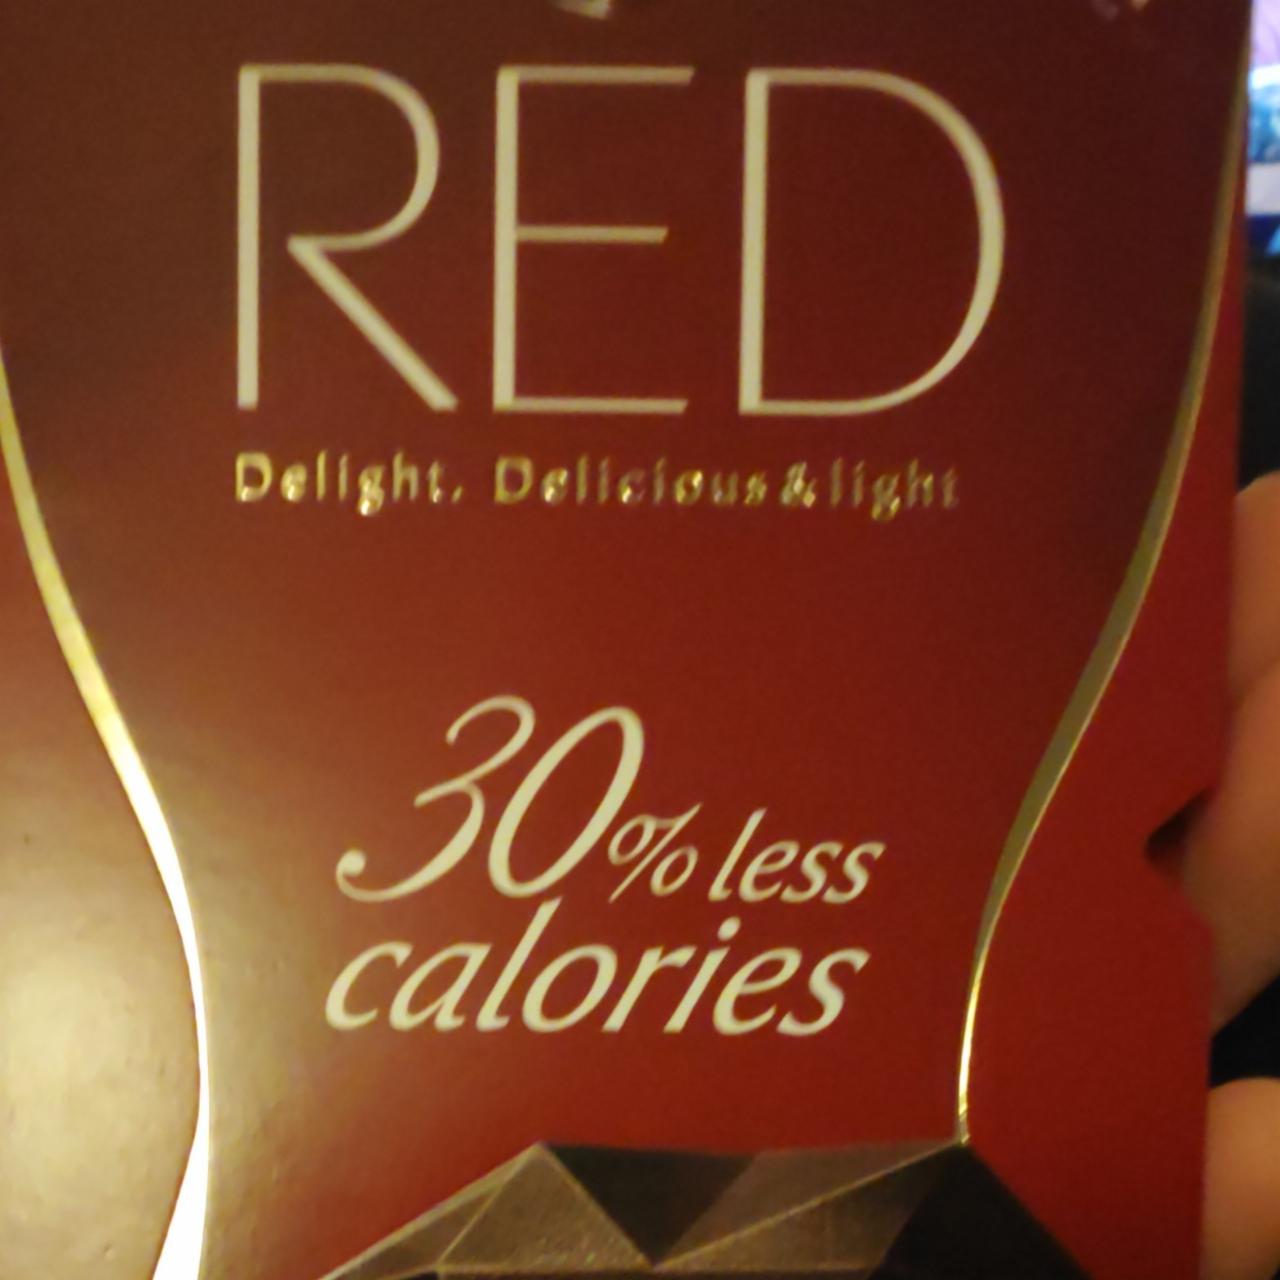 Fotografie - Extra Dark Chocolate 30% less calories RED